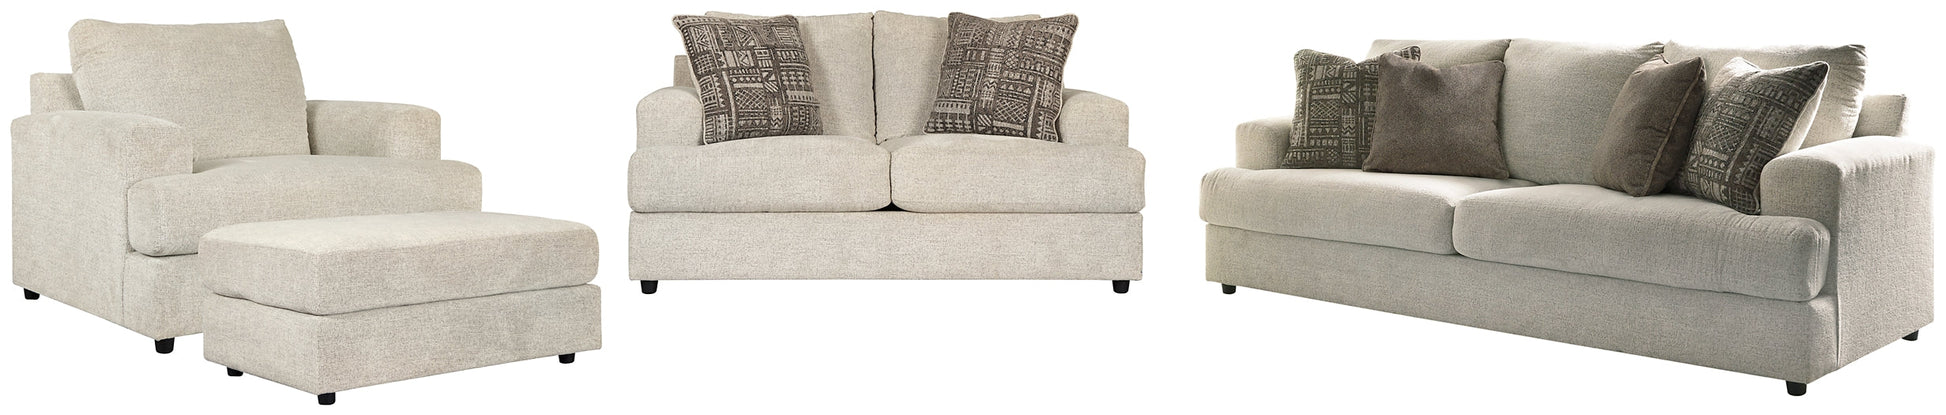 Soletren Sofa, Loveseat, Chair and Ottoman at Cloud 9 Mattress & Furniture furniture, home furnishing, home decor